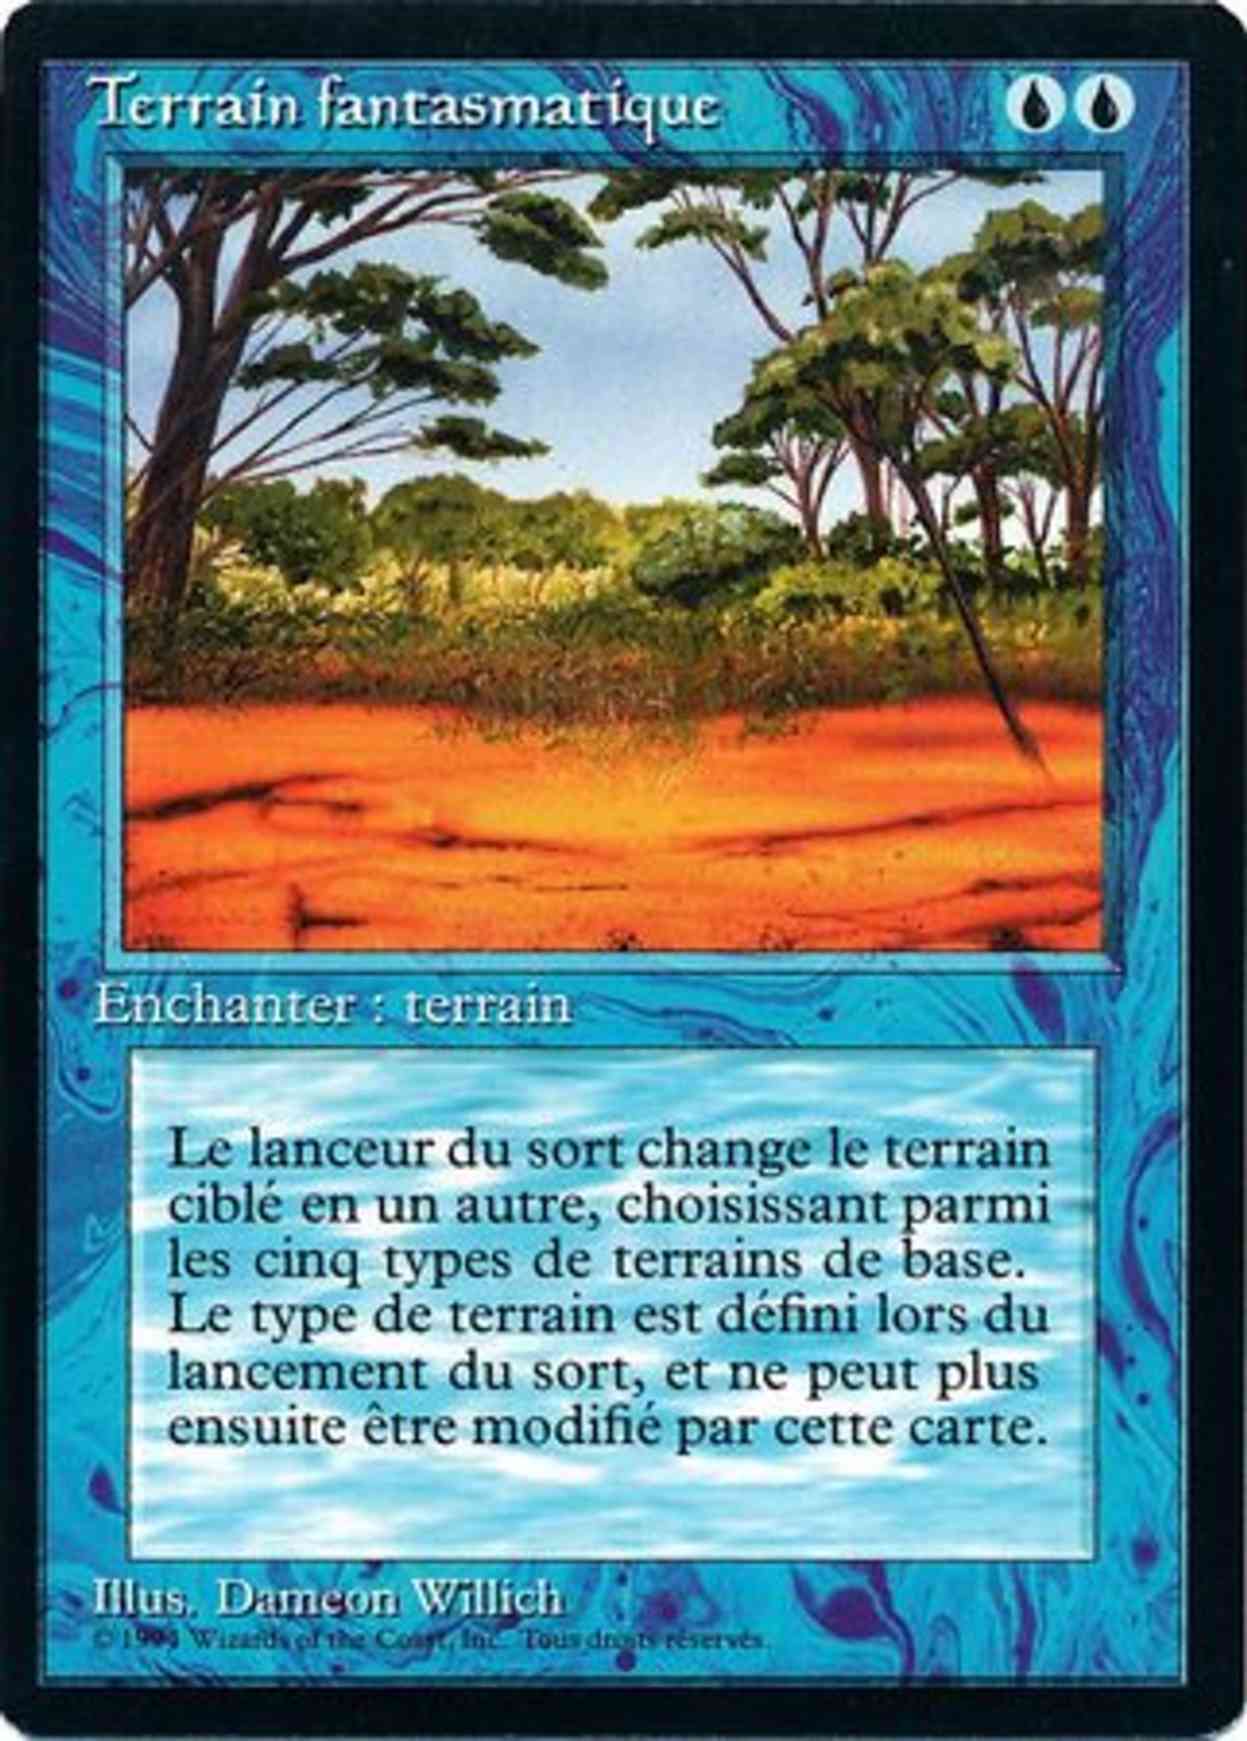 Phantasmal Terrain magic card front